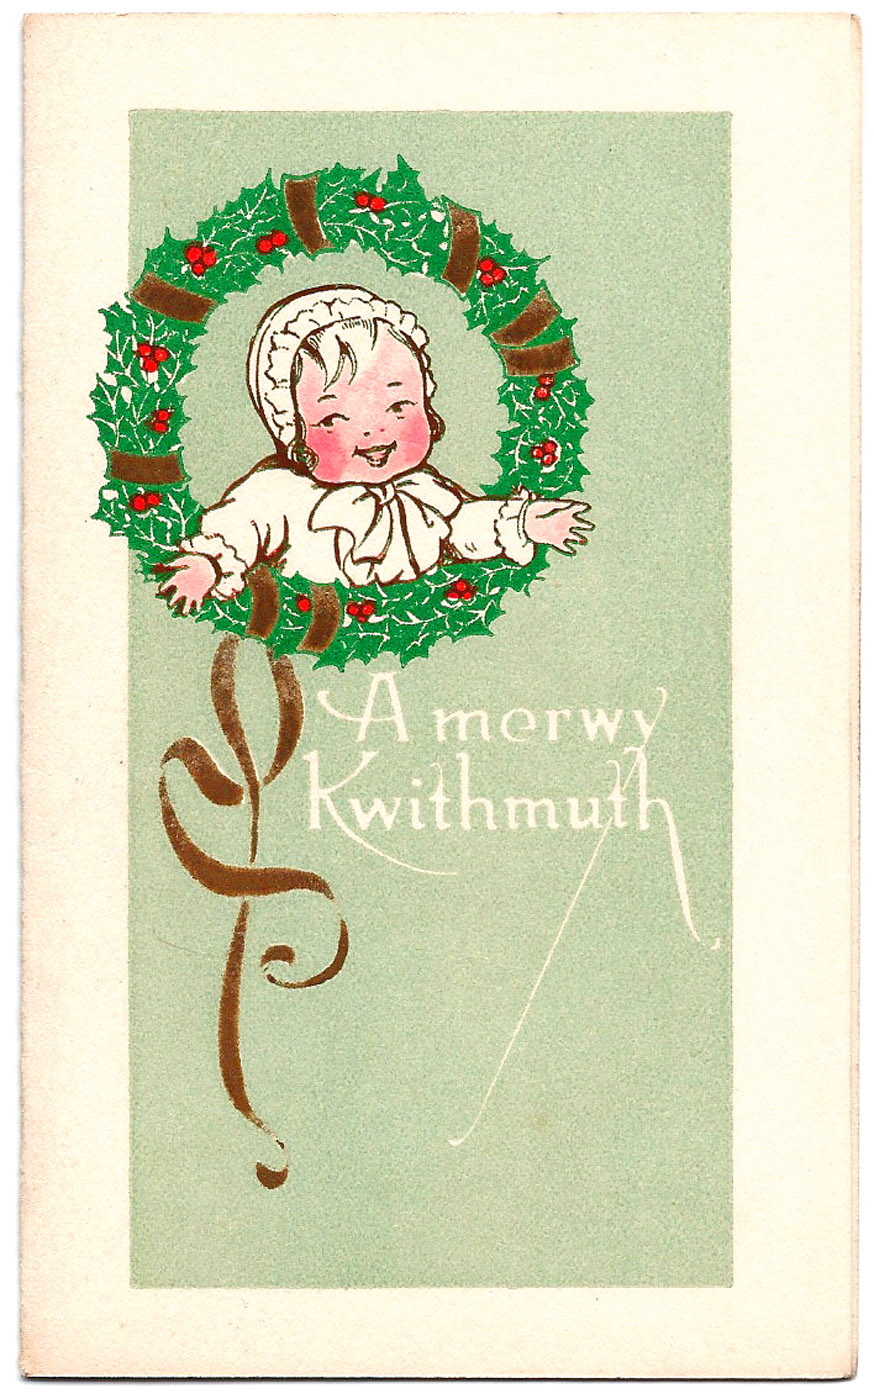 Lisping child - amusing merry Christmas card - ca. 1920